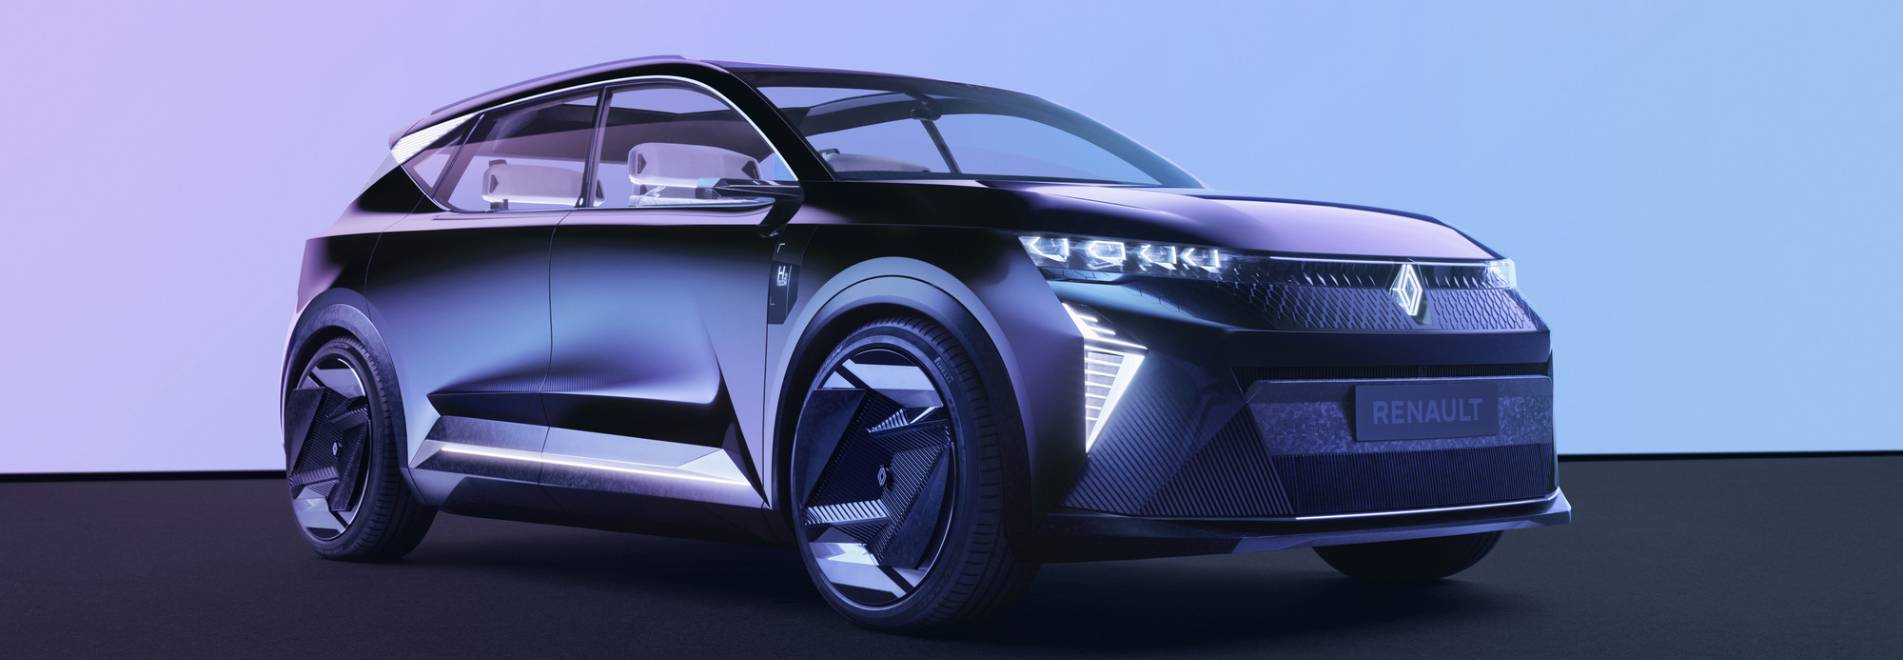 Innovation: electric, connected & autonomous vehicle - Renault Group